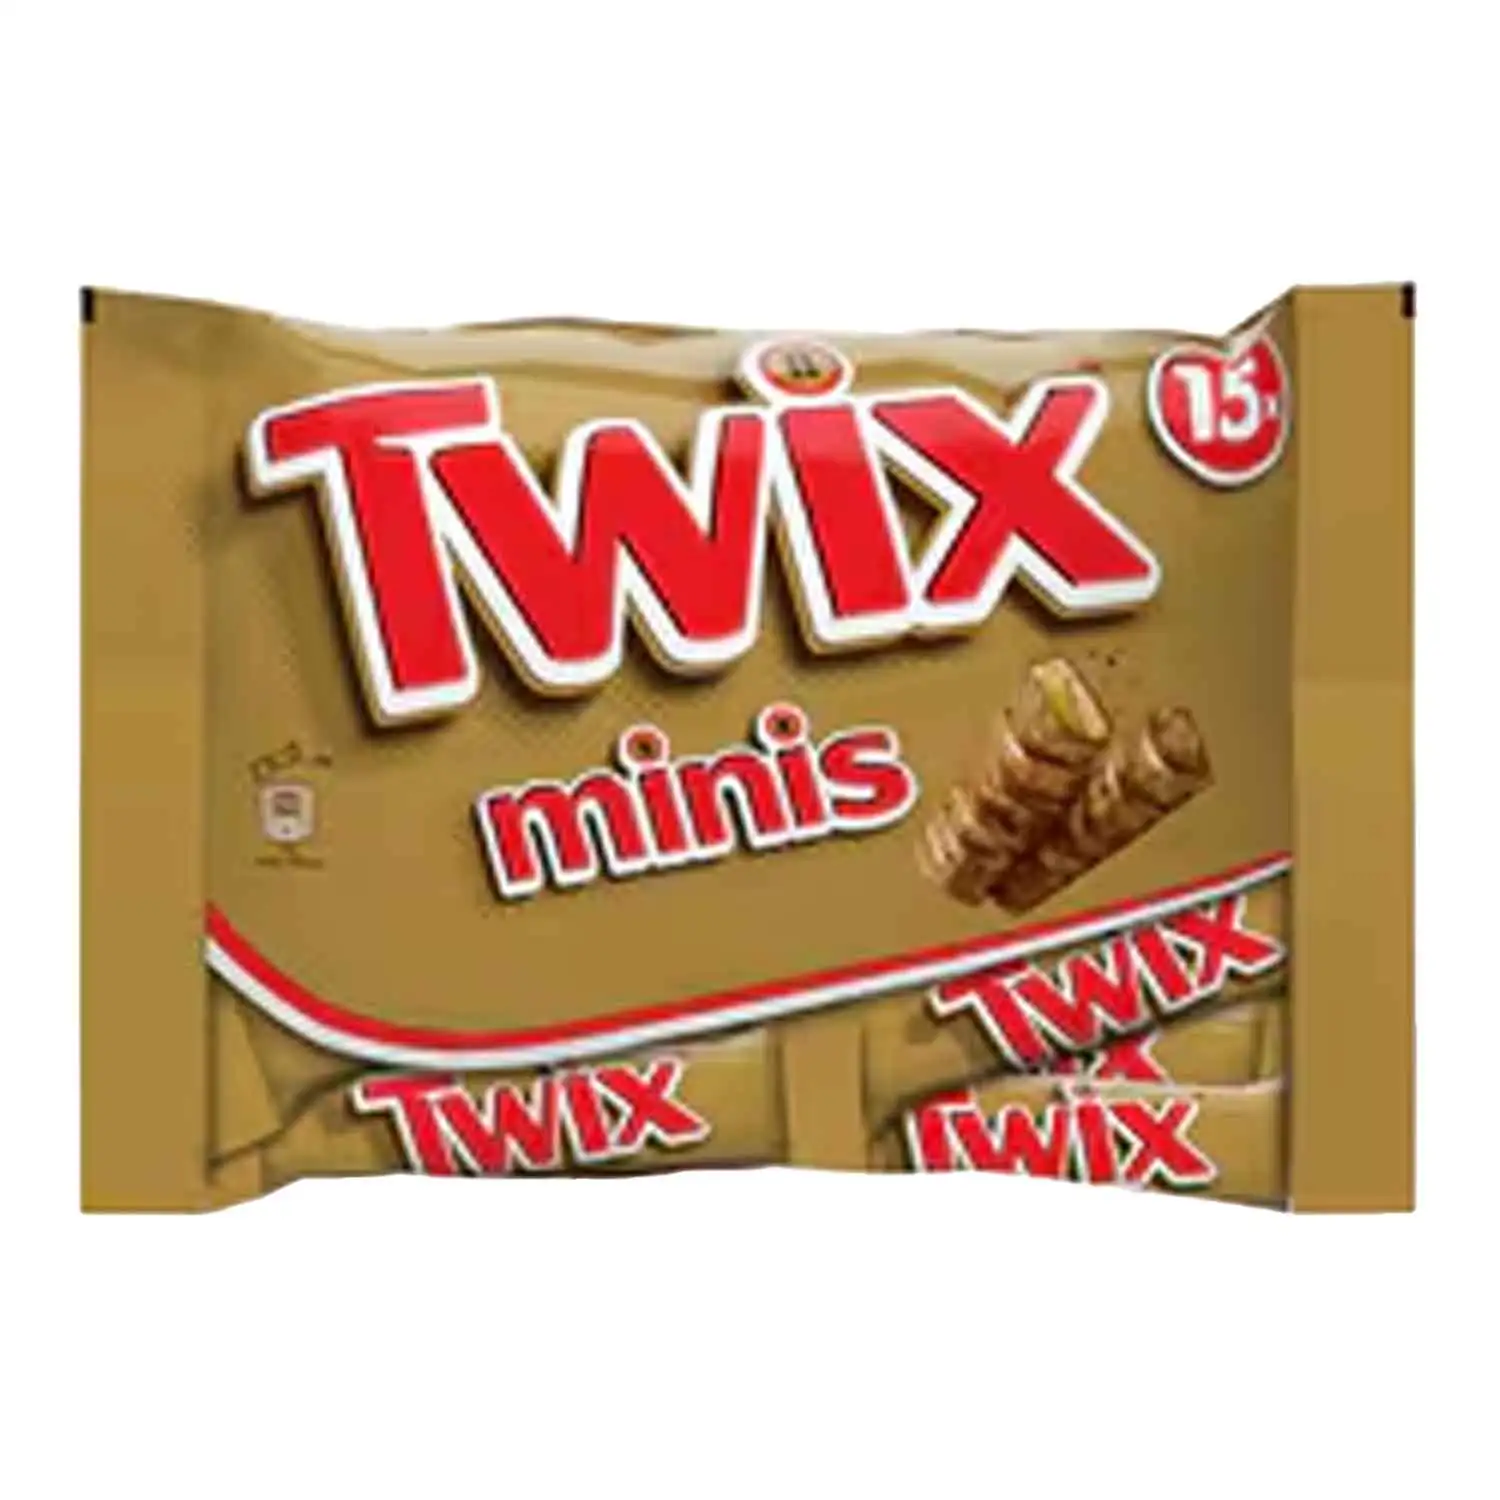 Twix minis 333g - Buy at Real Tobacco